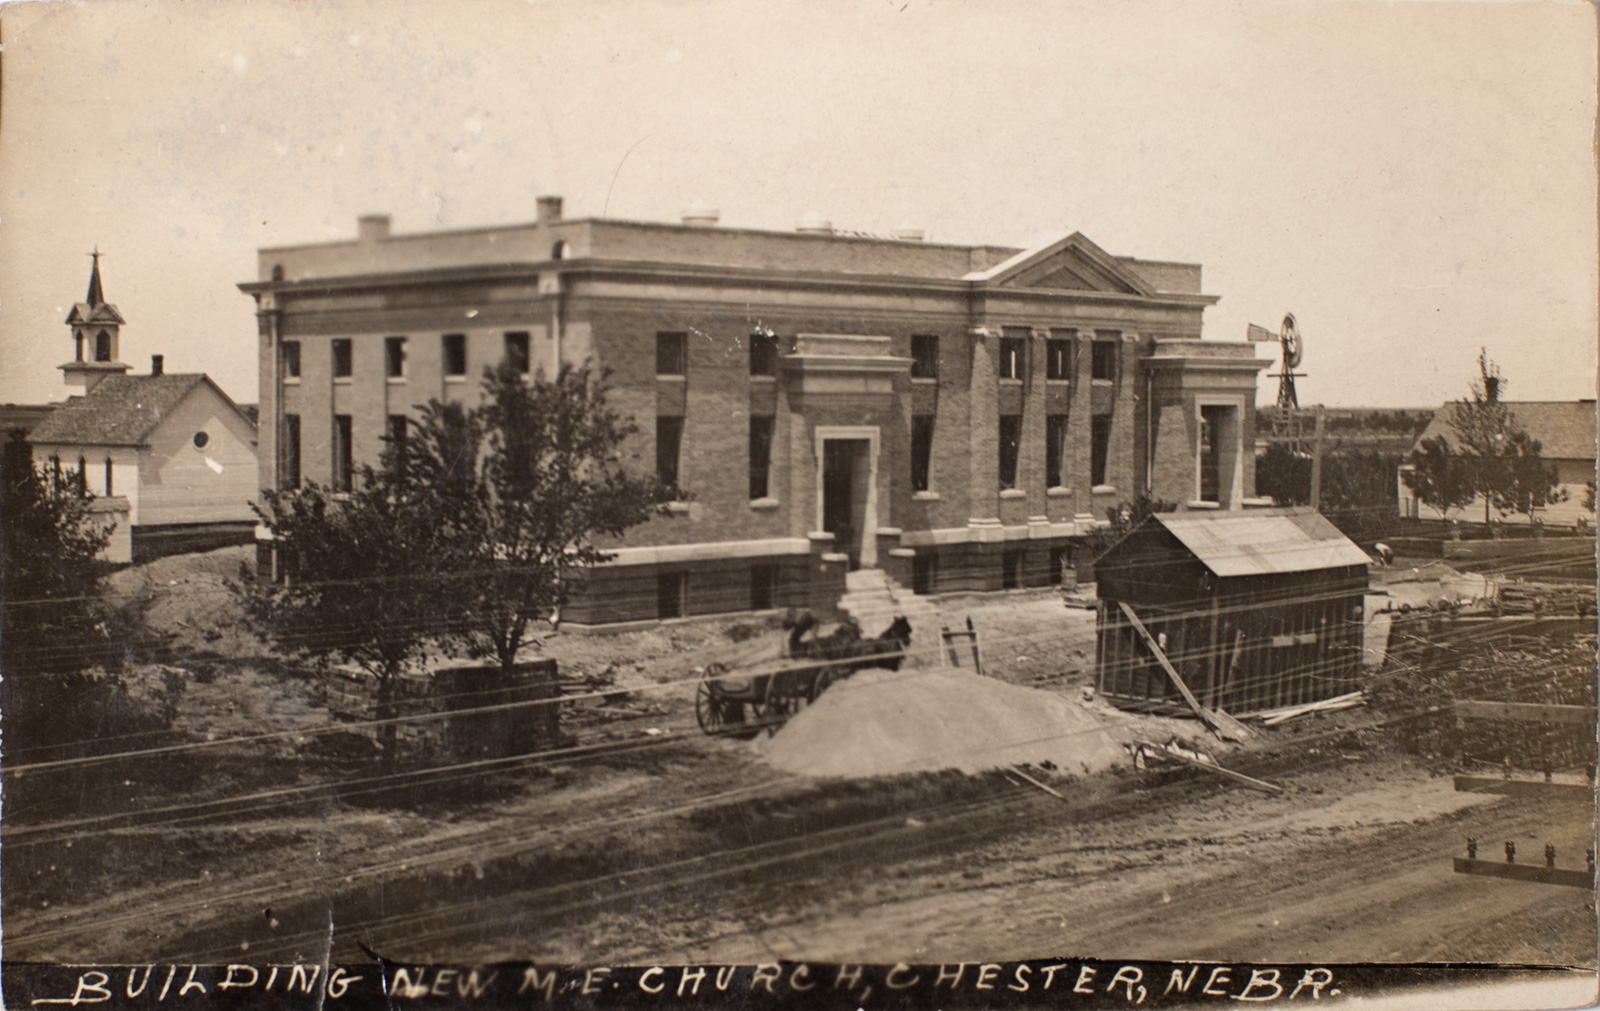 Building the Methodist Church in Chester Nebraska - 1910 main image